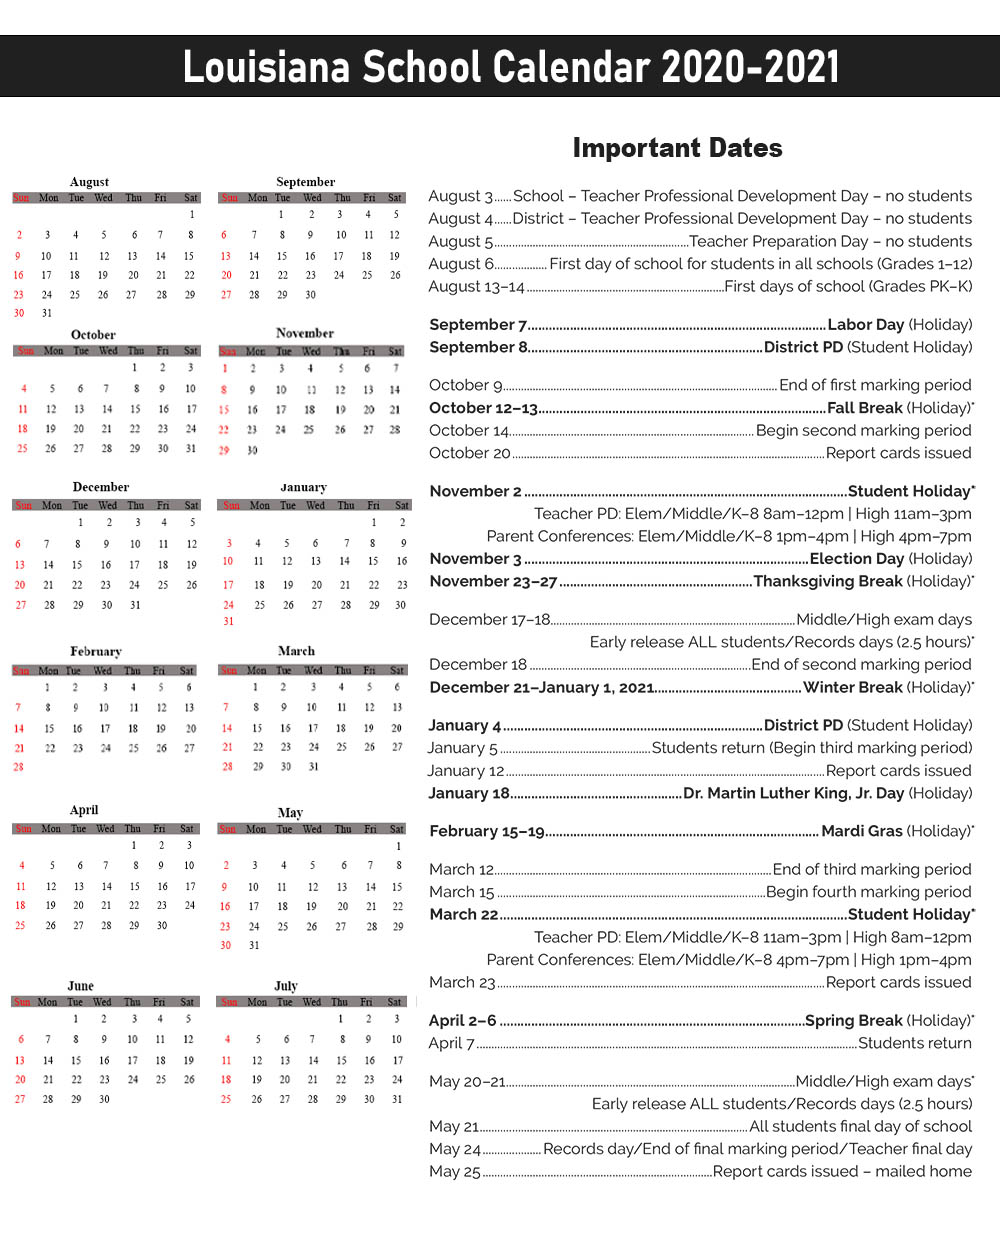 Louisiana Public School Calendar 2020